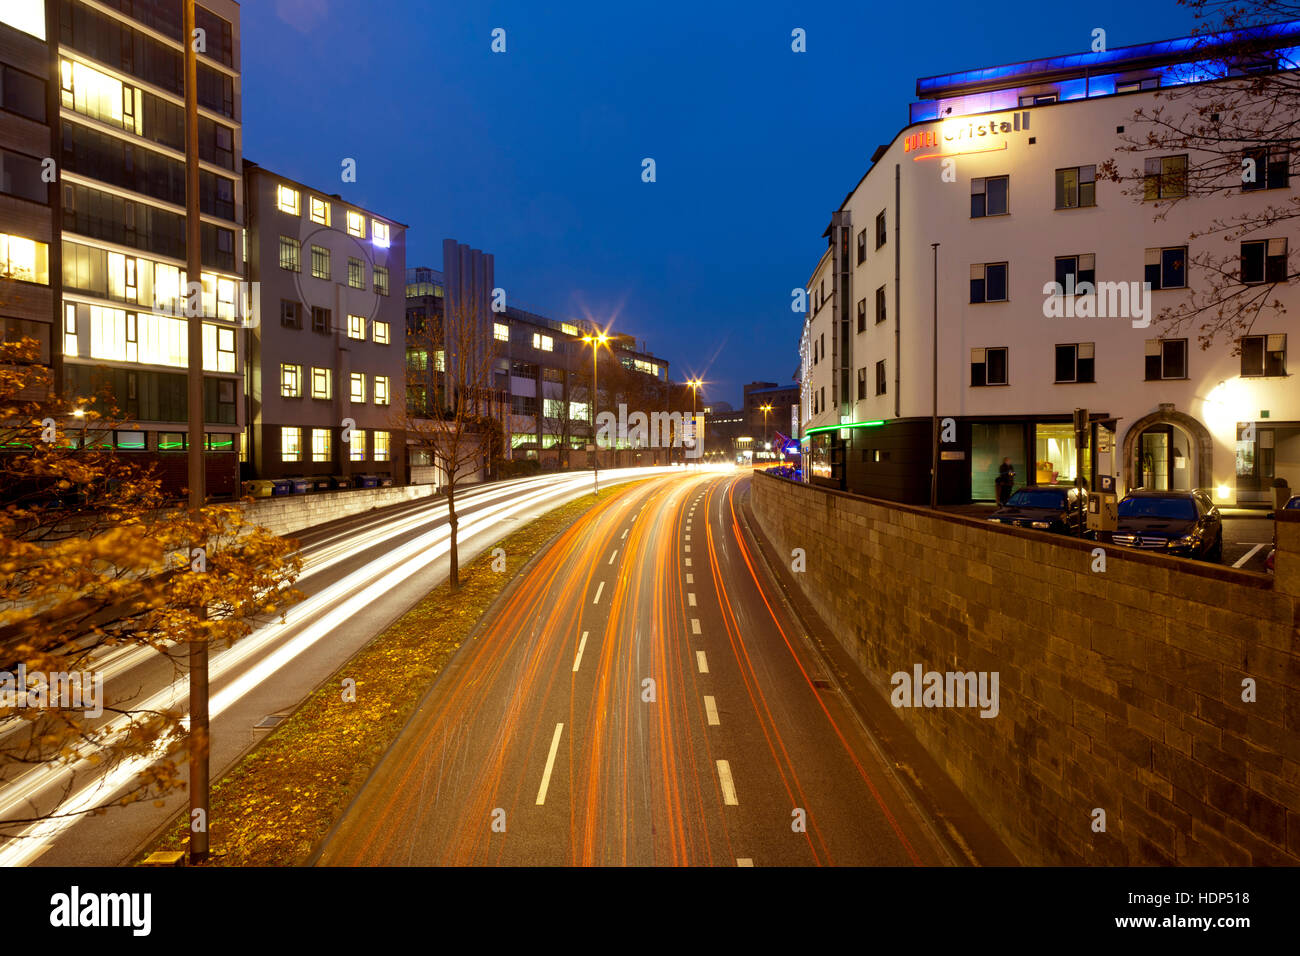 Europe, Germany, North Rhine-Westphalia, Cologne, evening traffic on the Ursula Street, Hotel Cristall. Stock Photo